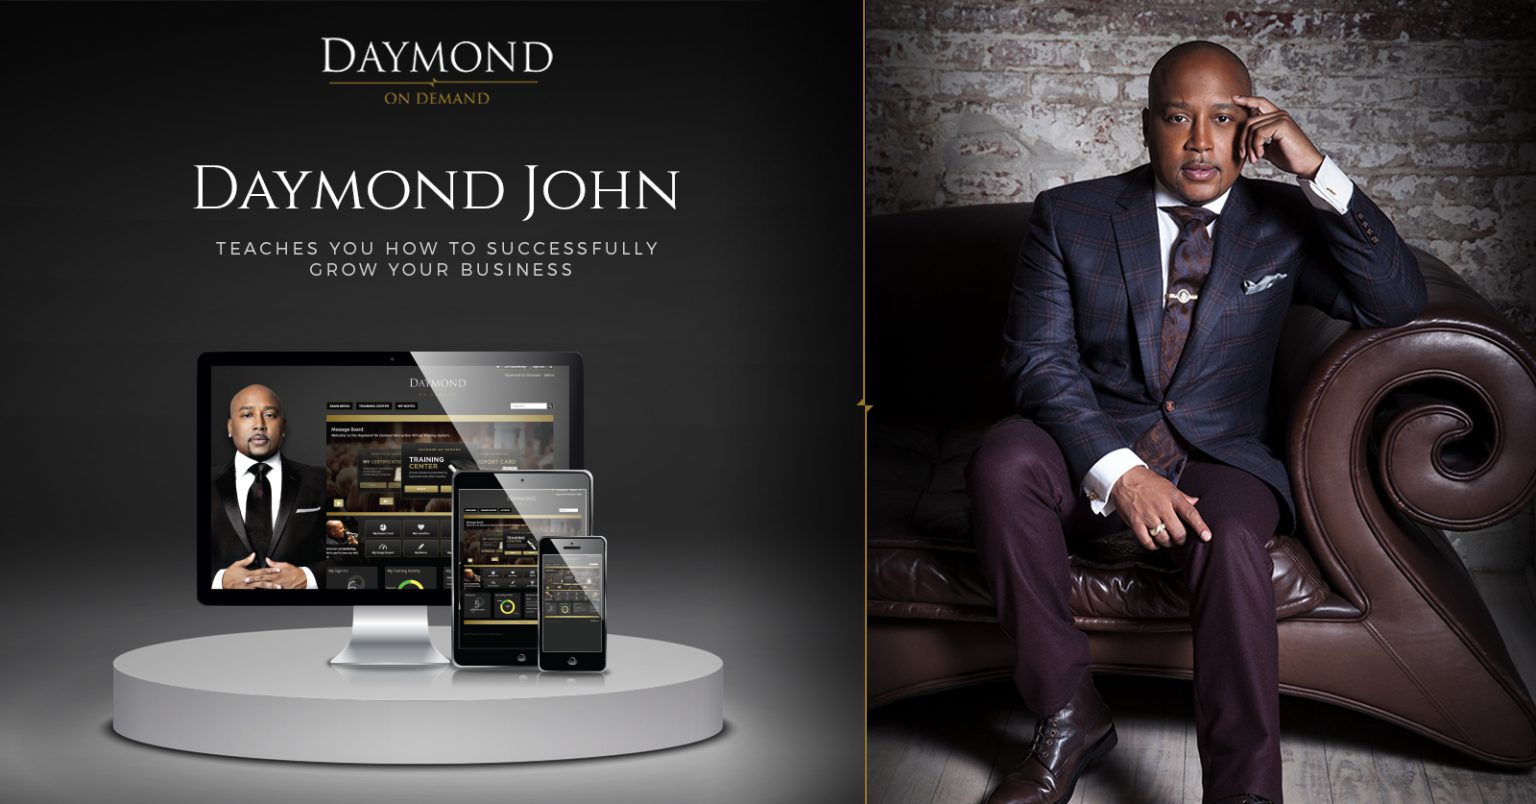 [SUPER HOT SHARE] Daymond John – Teaches You His Billion Dollar Business Secret Download